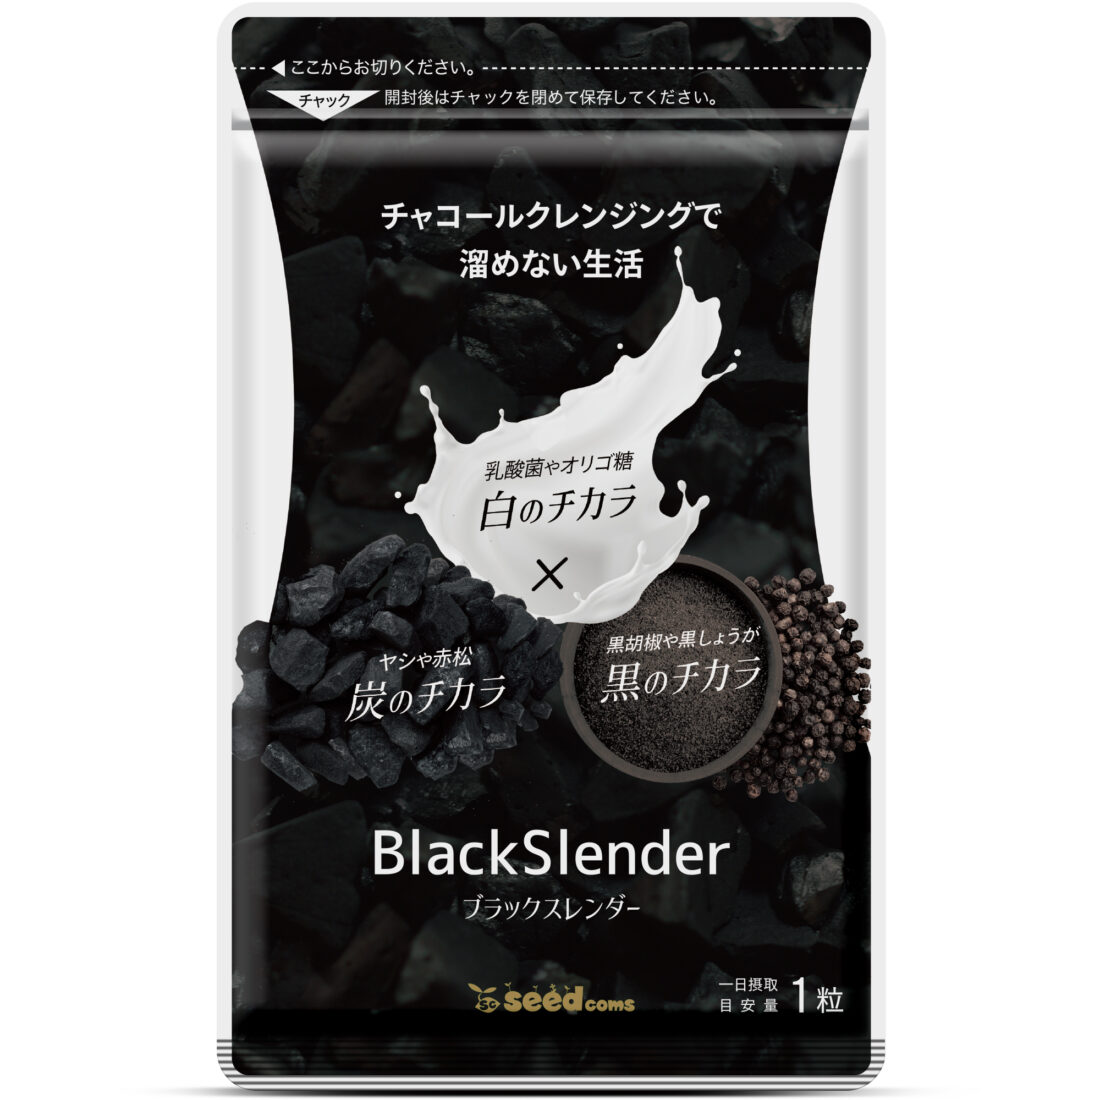 Black Slender seedcoms サプリメント商品パッケージ画像